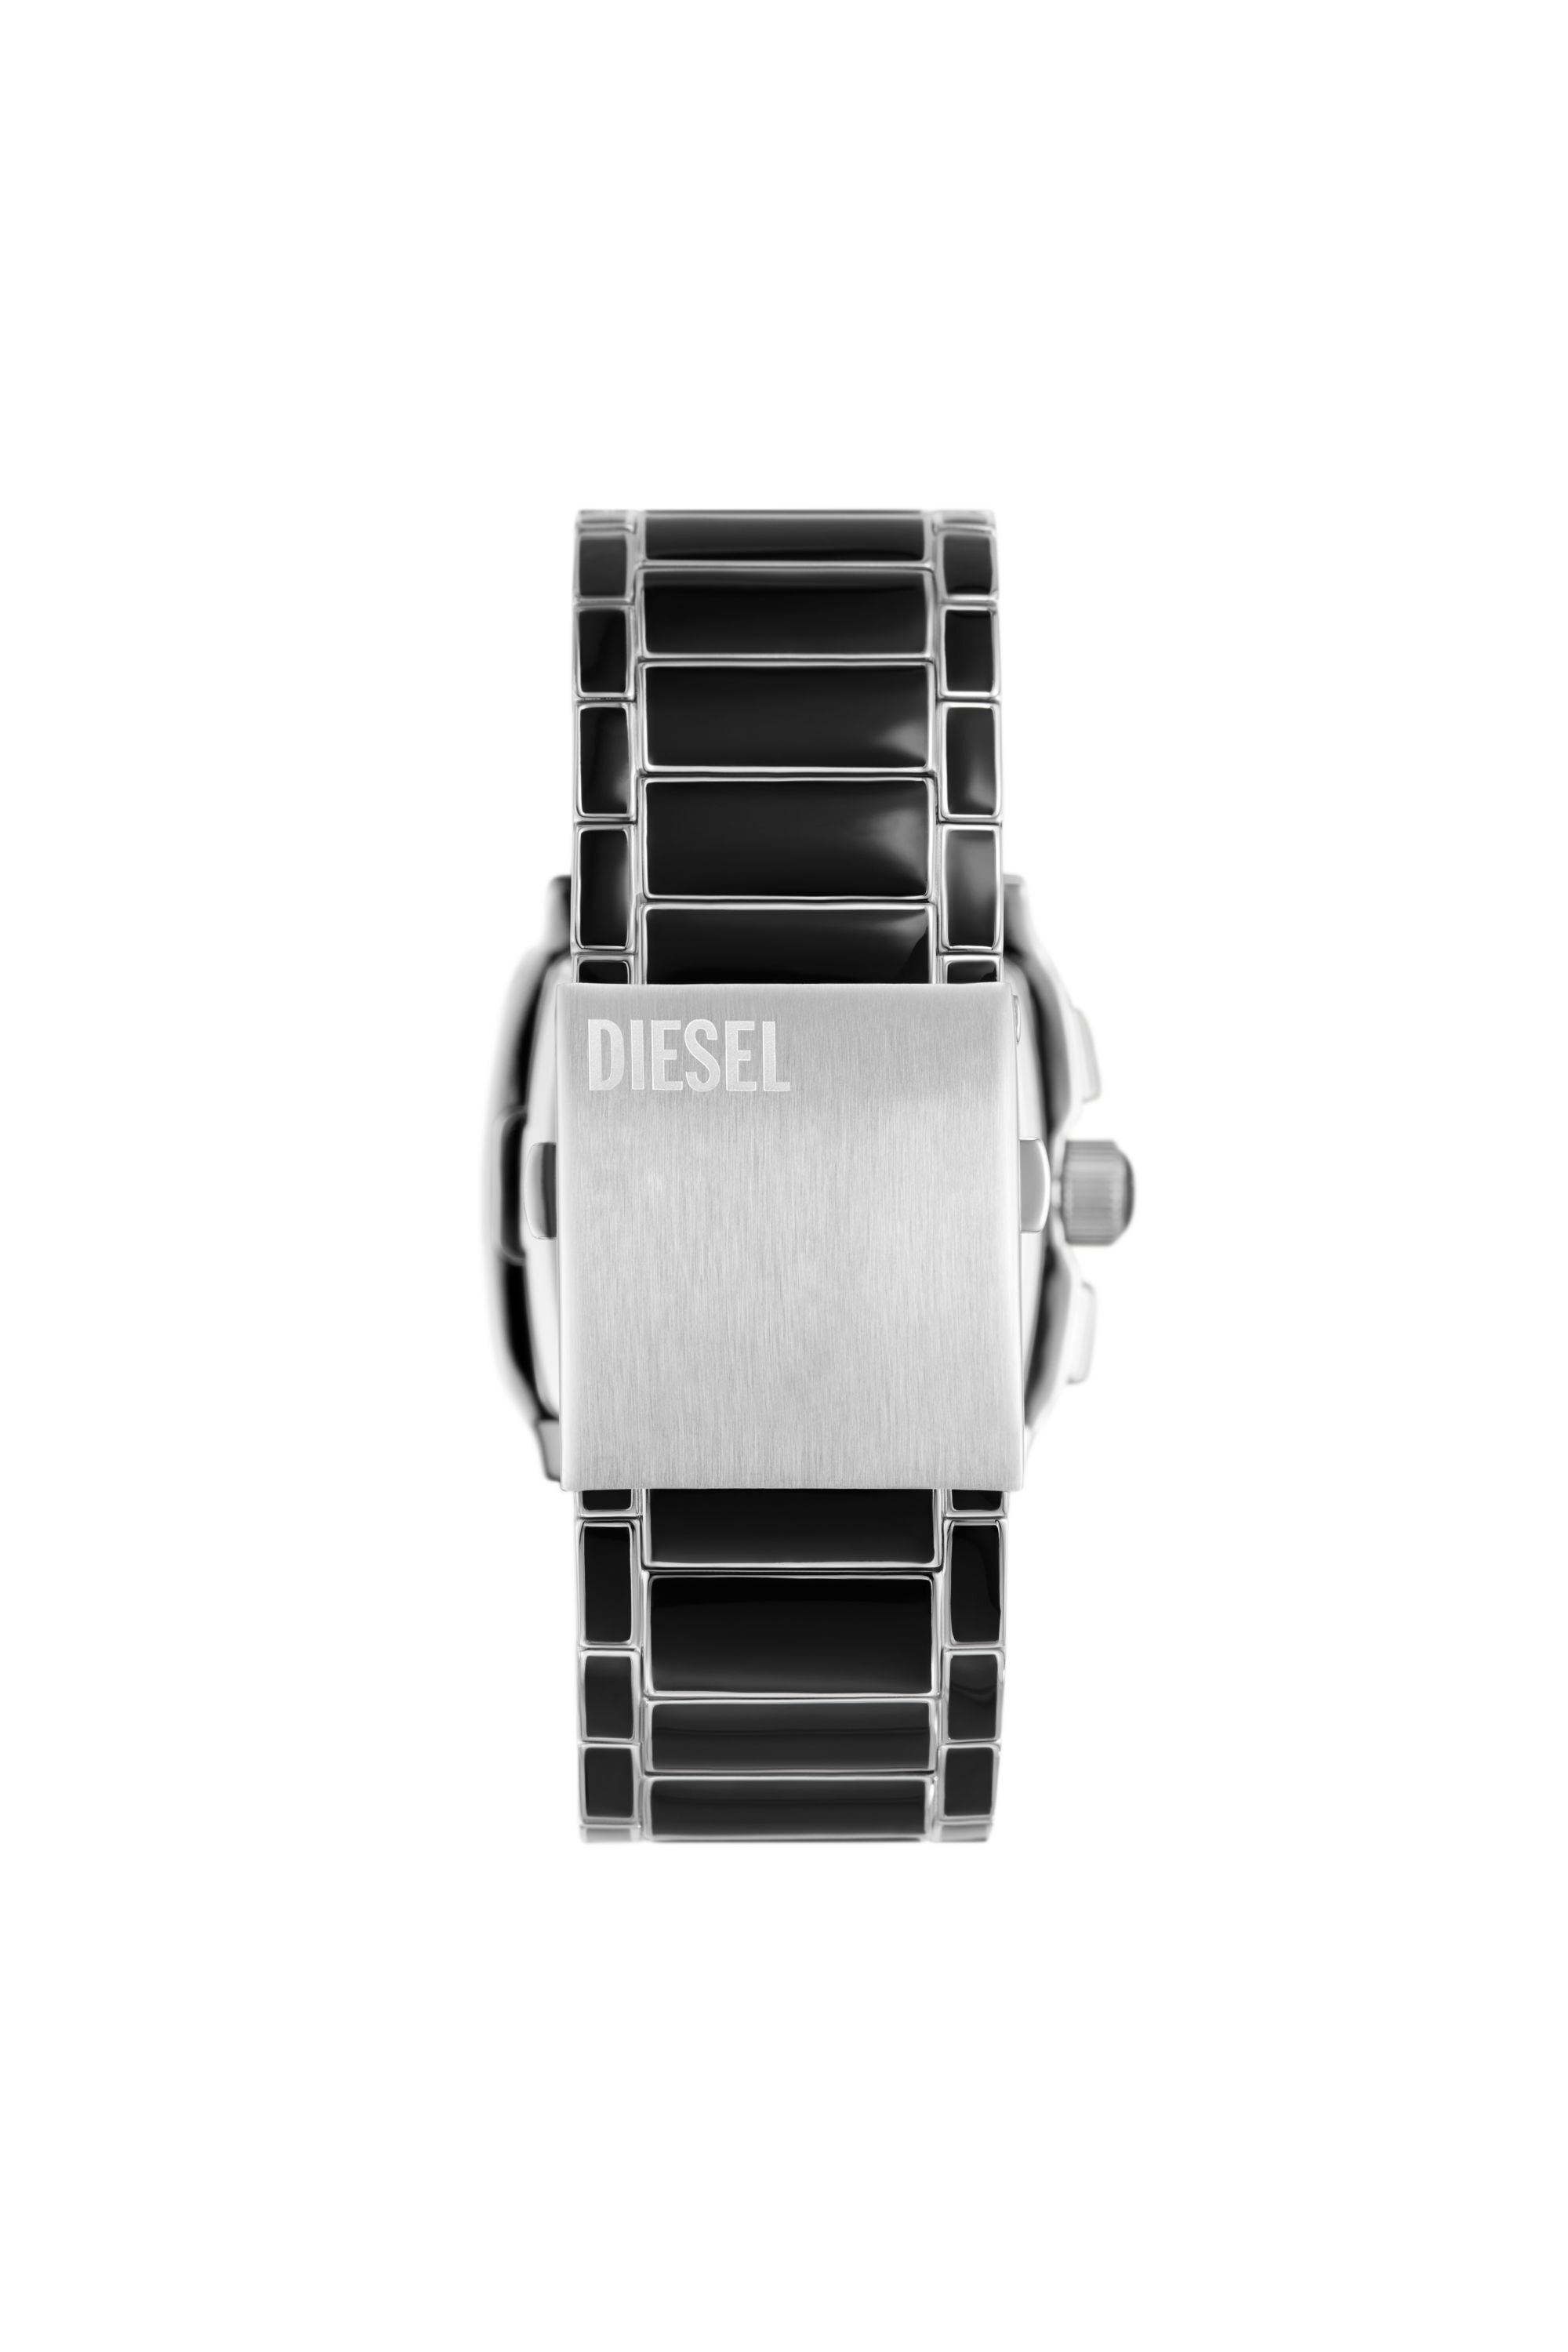 Cliffhanger Diesel black watch Men\'s enamel and stainless steel DZ4646 |